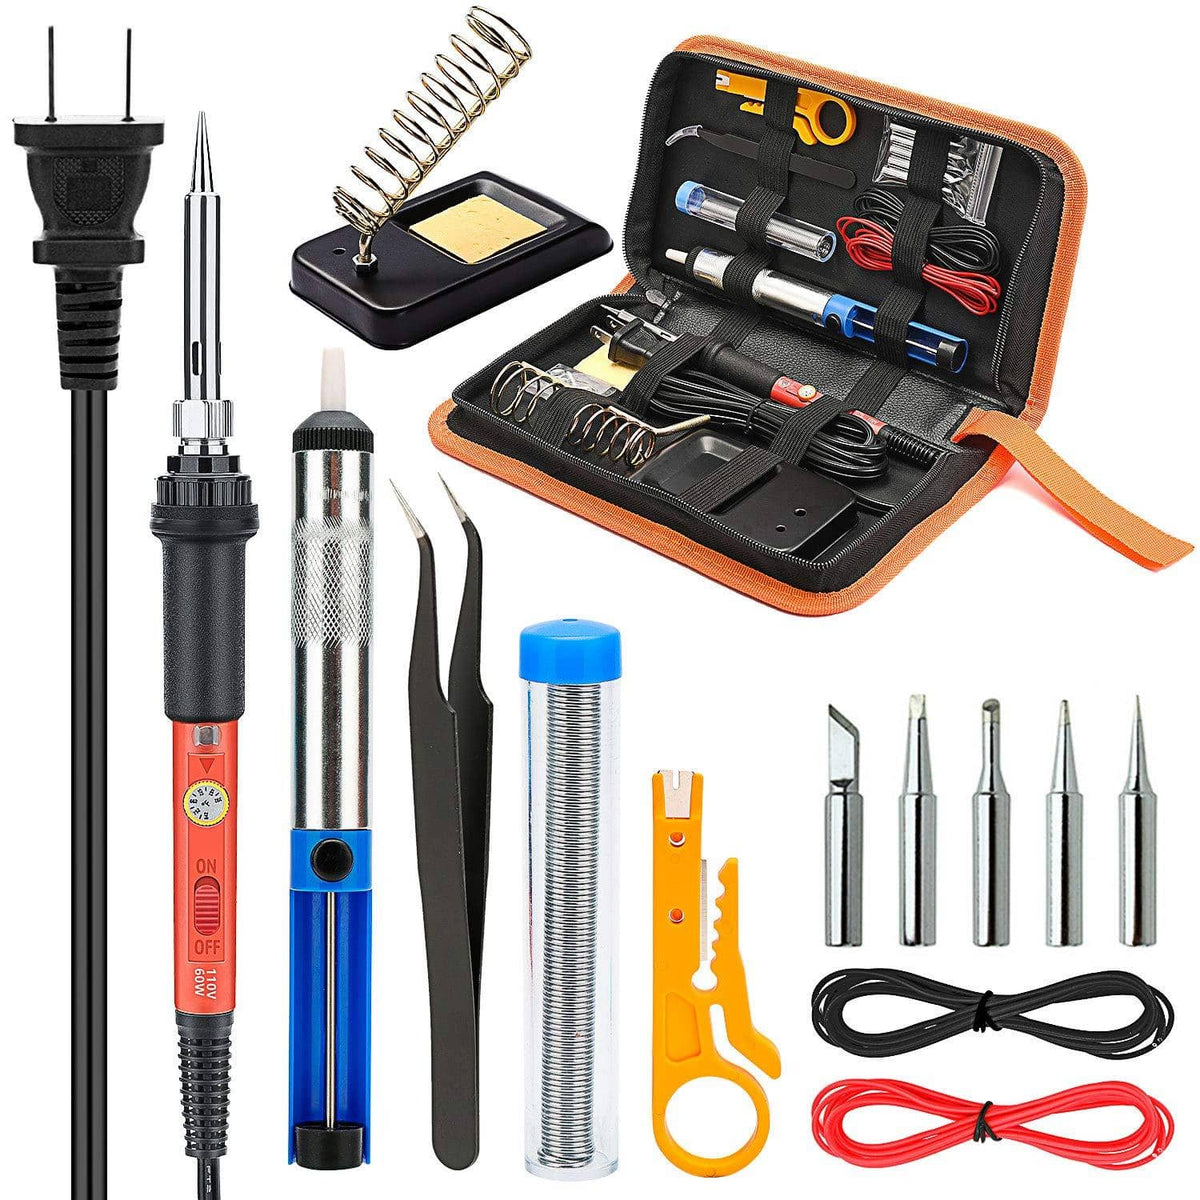 Heavy-duty Soldering Tweezers Repair Kit Set of 4